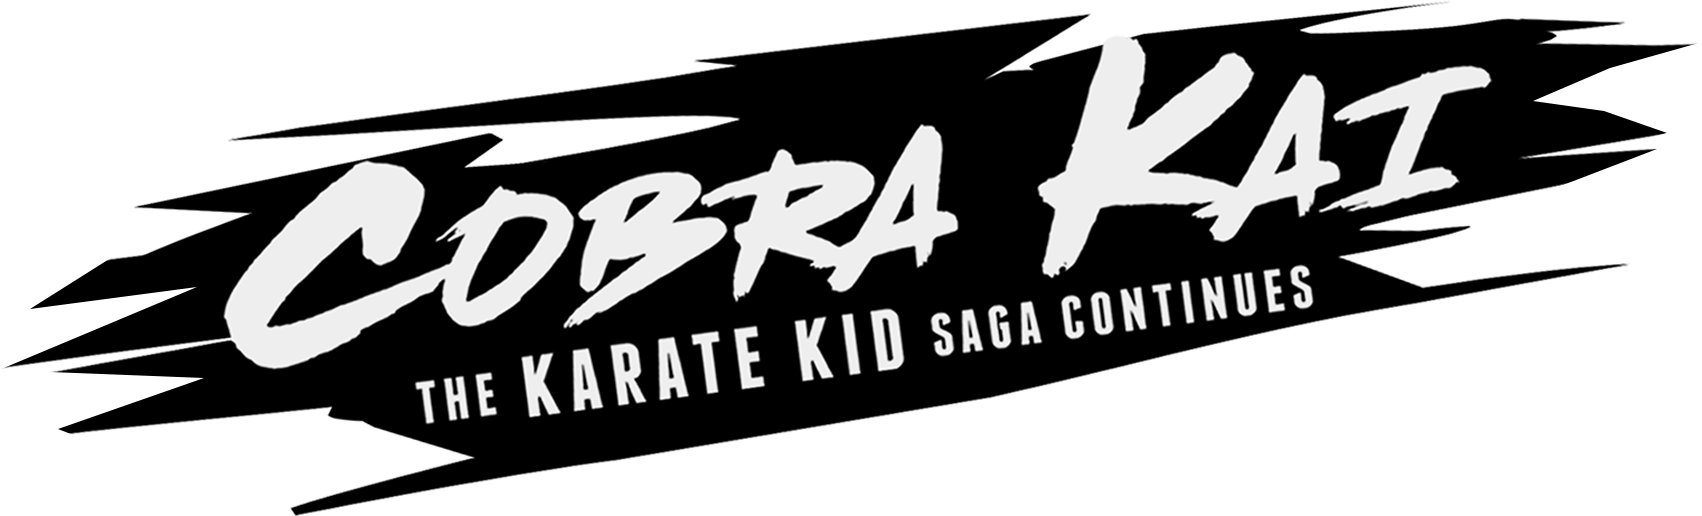 Cobra Kai: The Karate Kid Saga anunciado